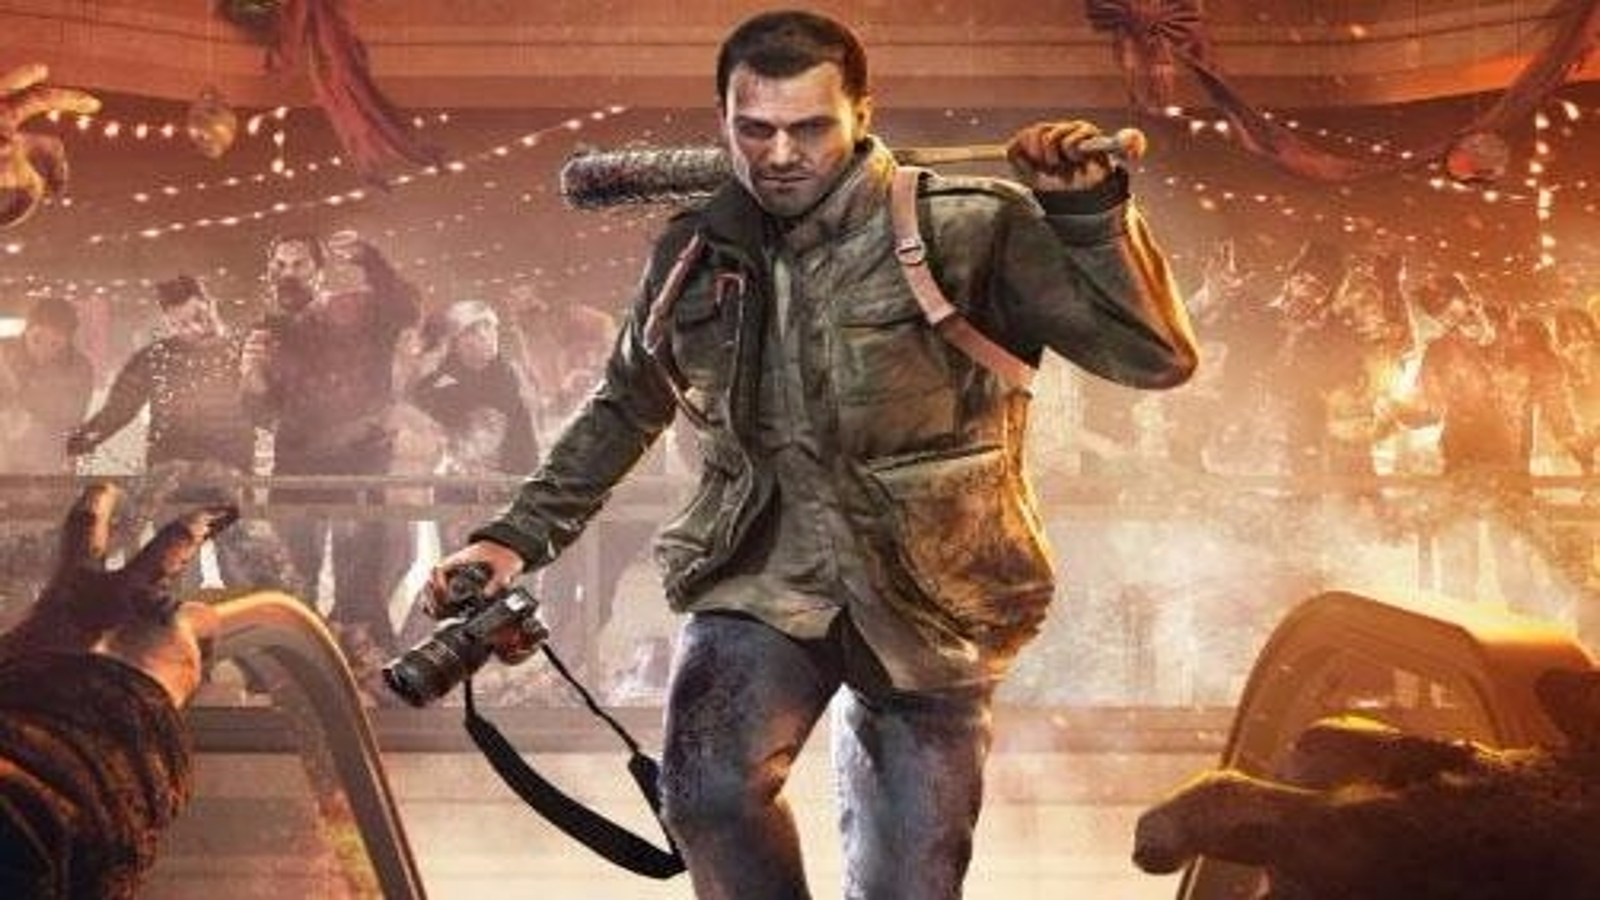 Dead Rising 3 – Zombie Apocalypse Evolved? – The Average Gamer